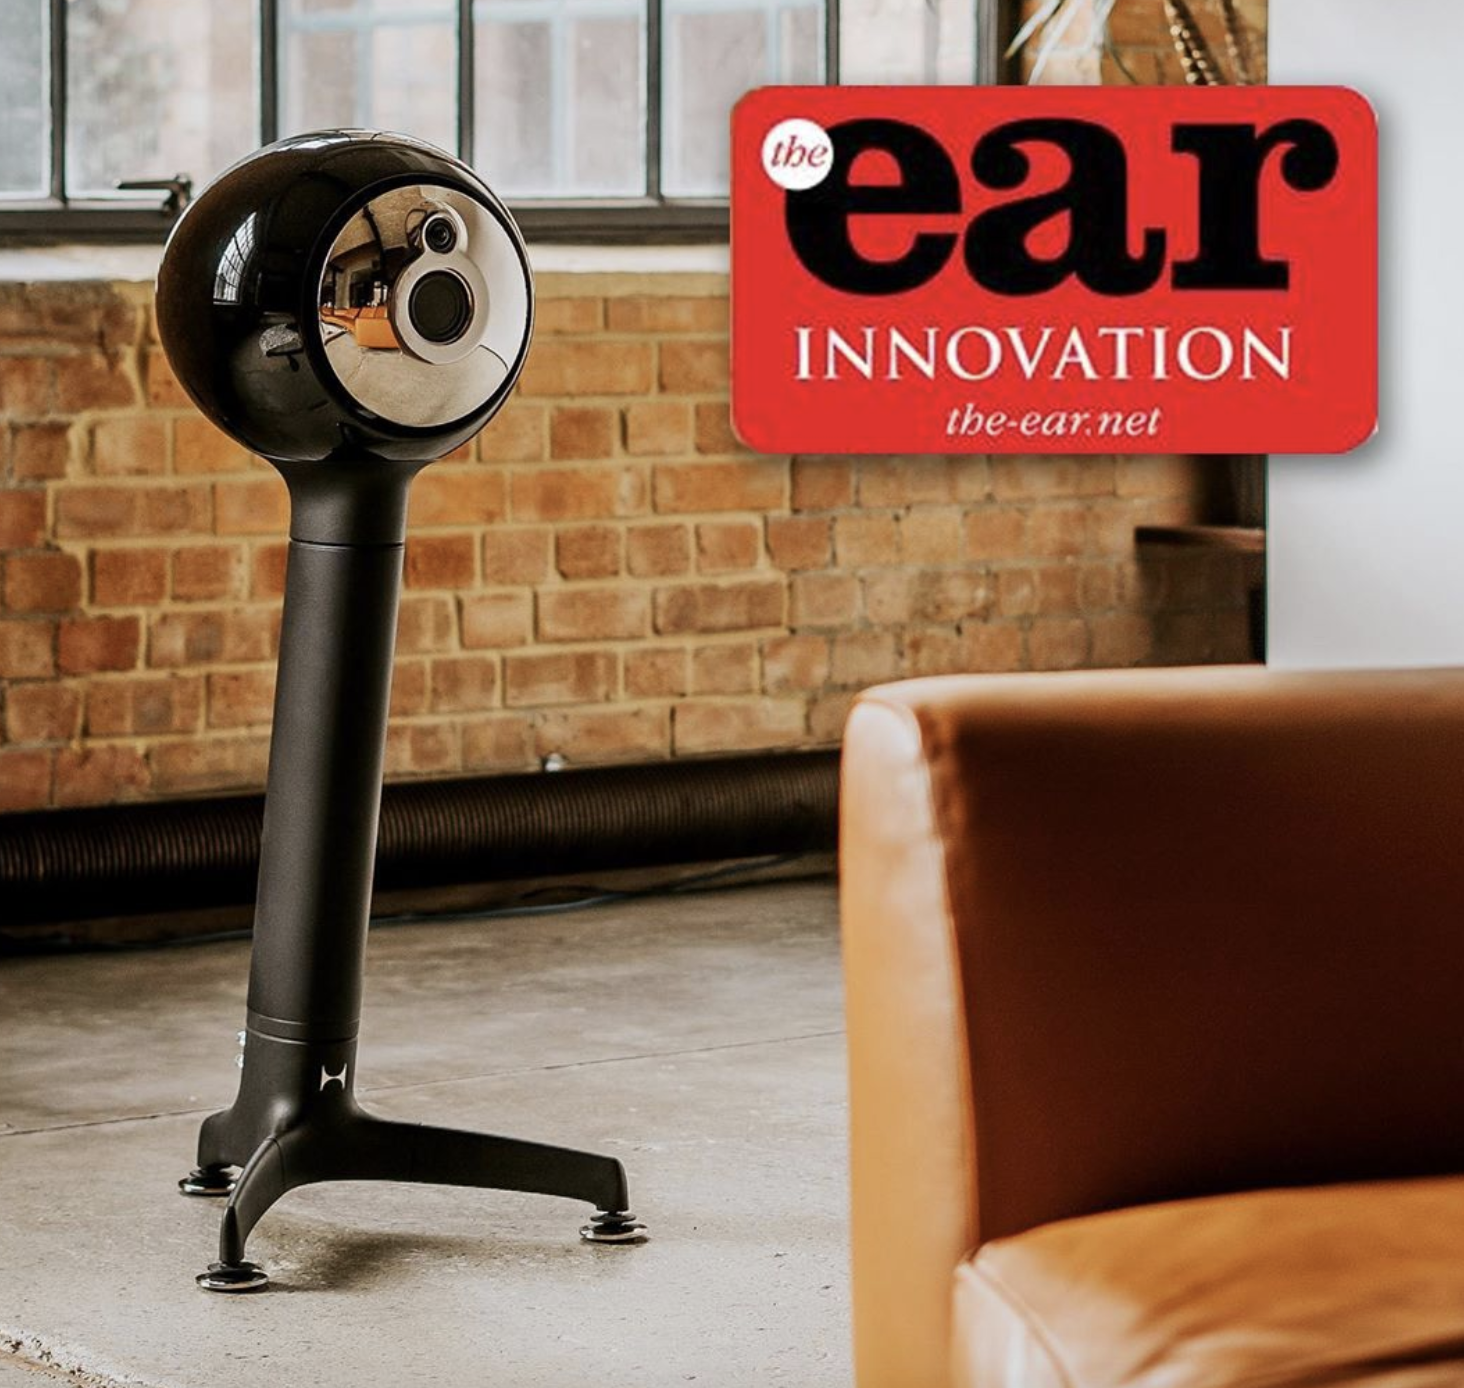 Innovation Award from 'the-ear'